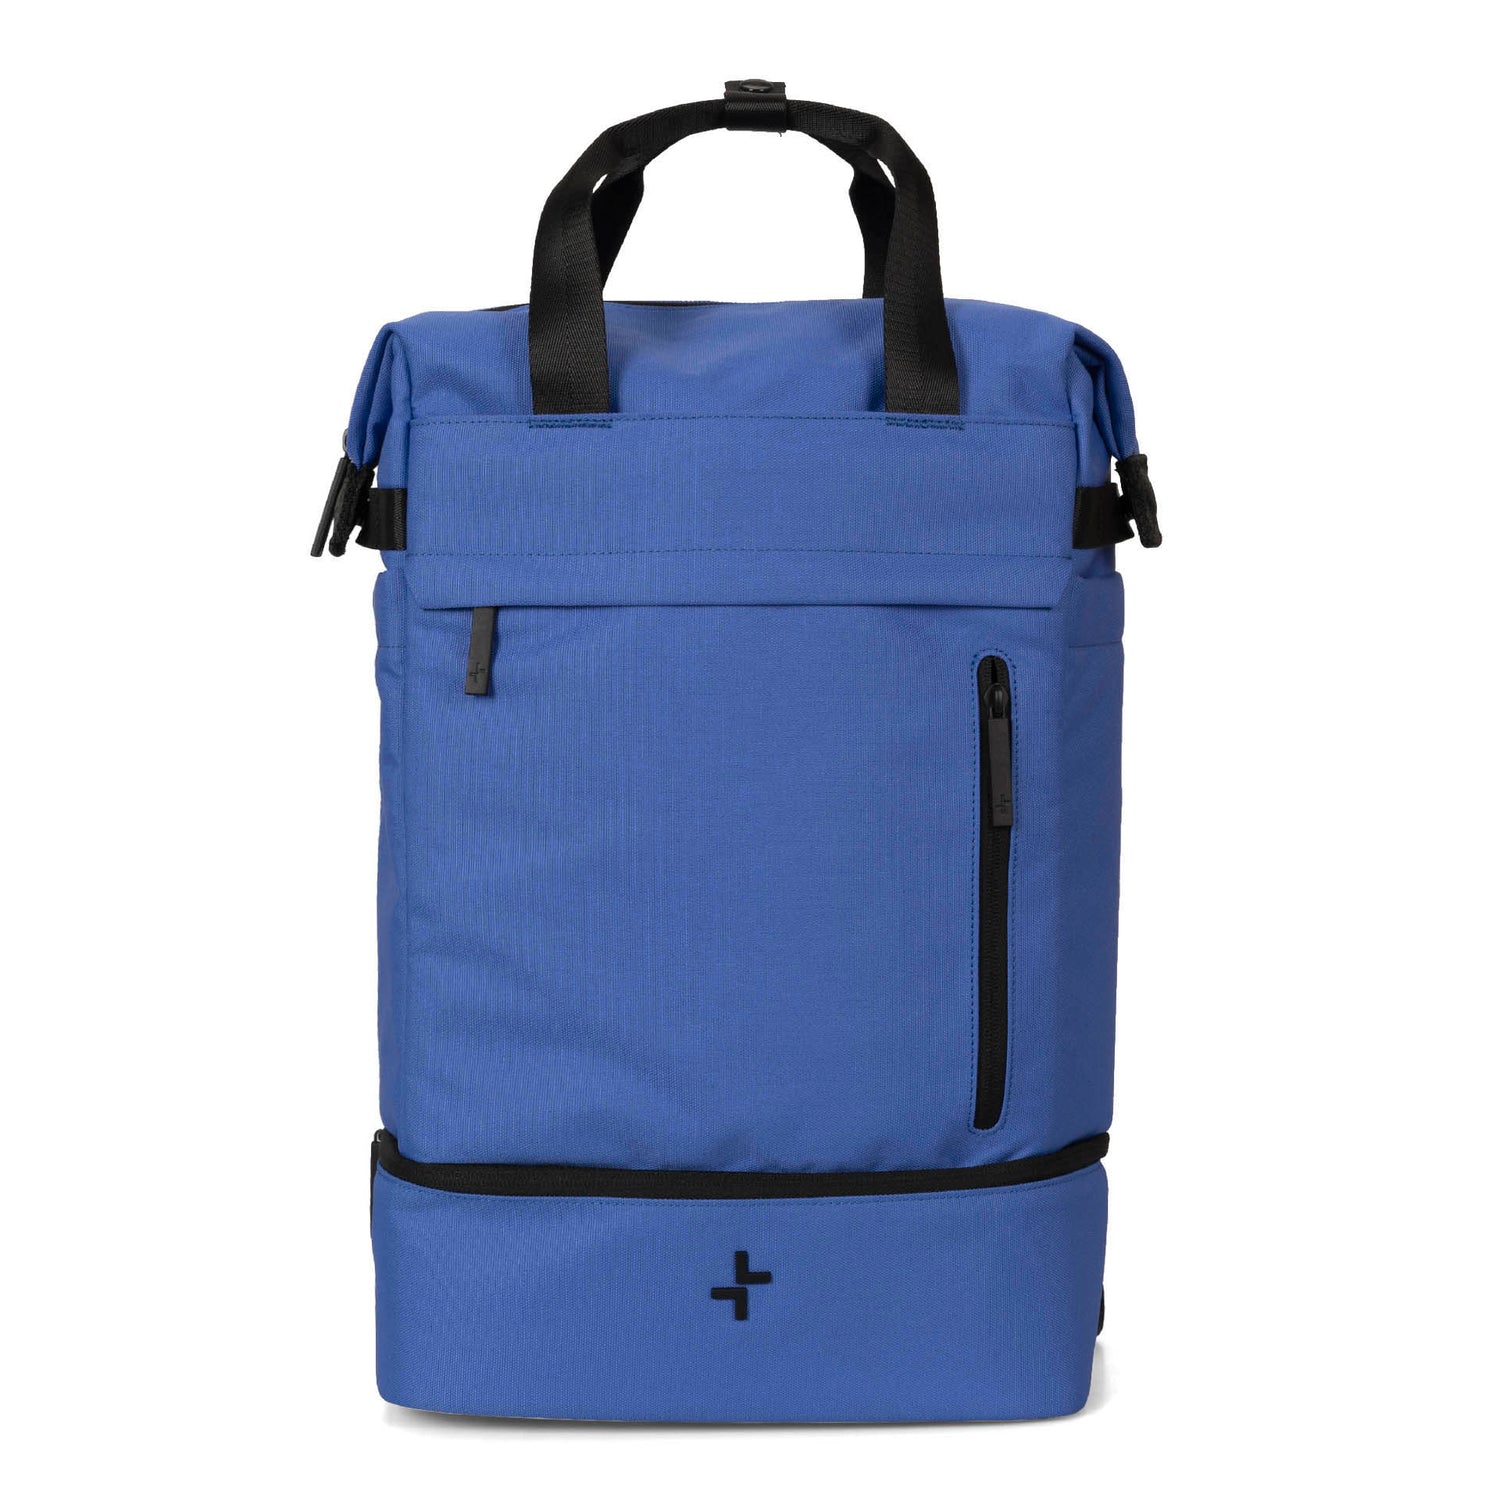 Banff 15" Laptop Tote Backpack - Bentley